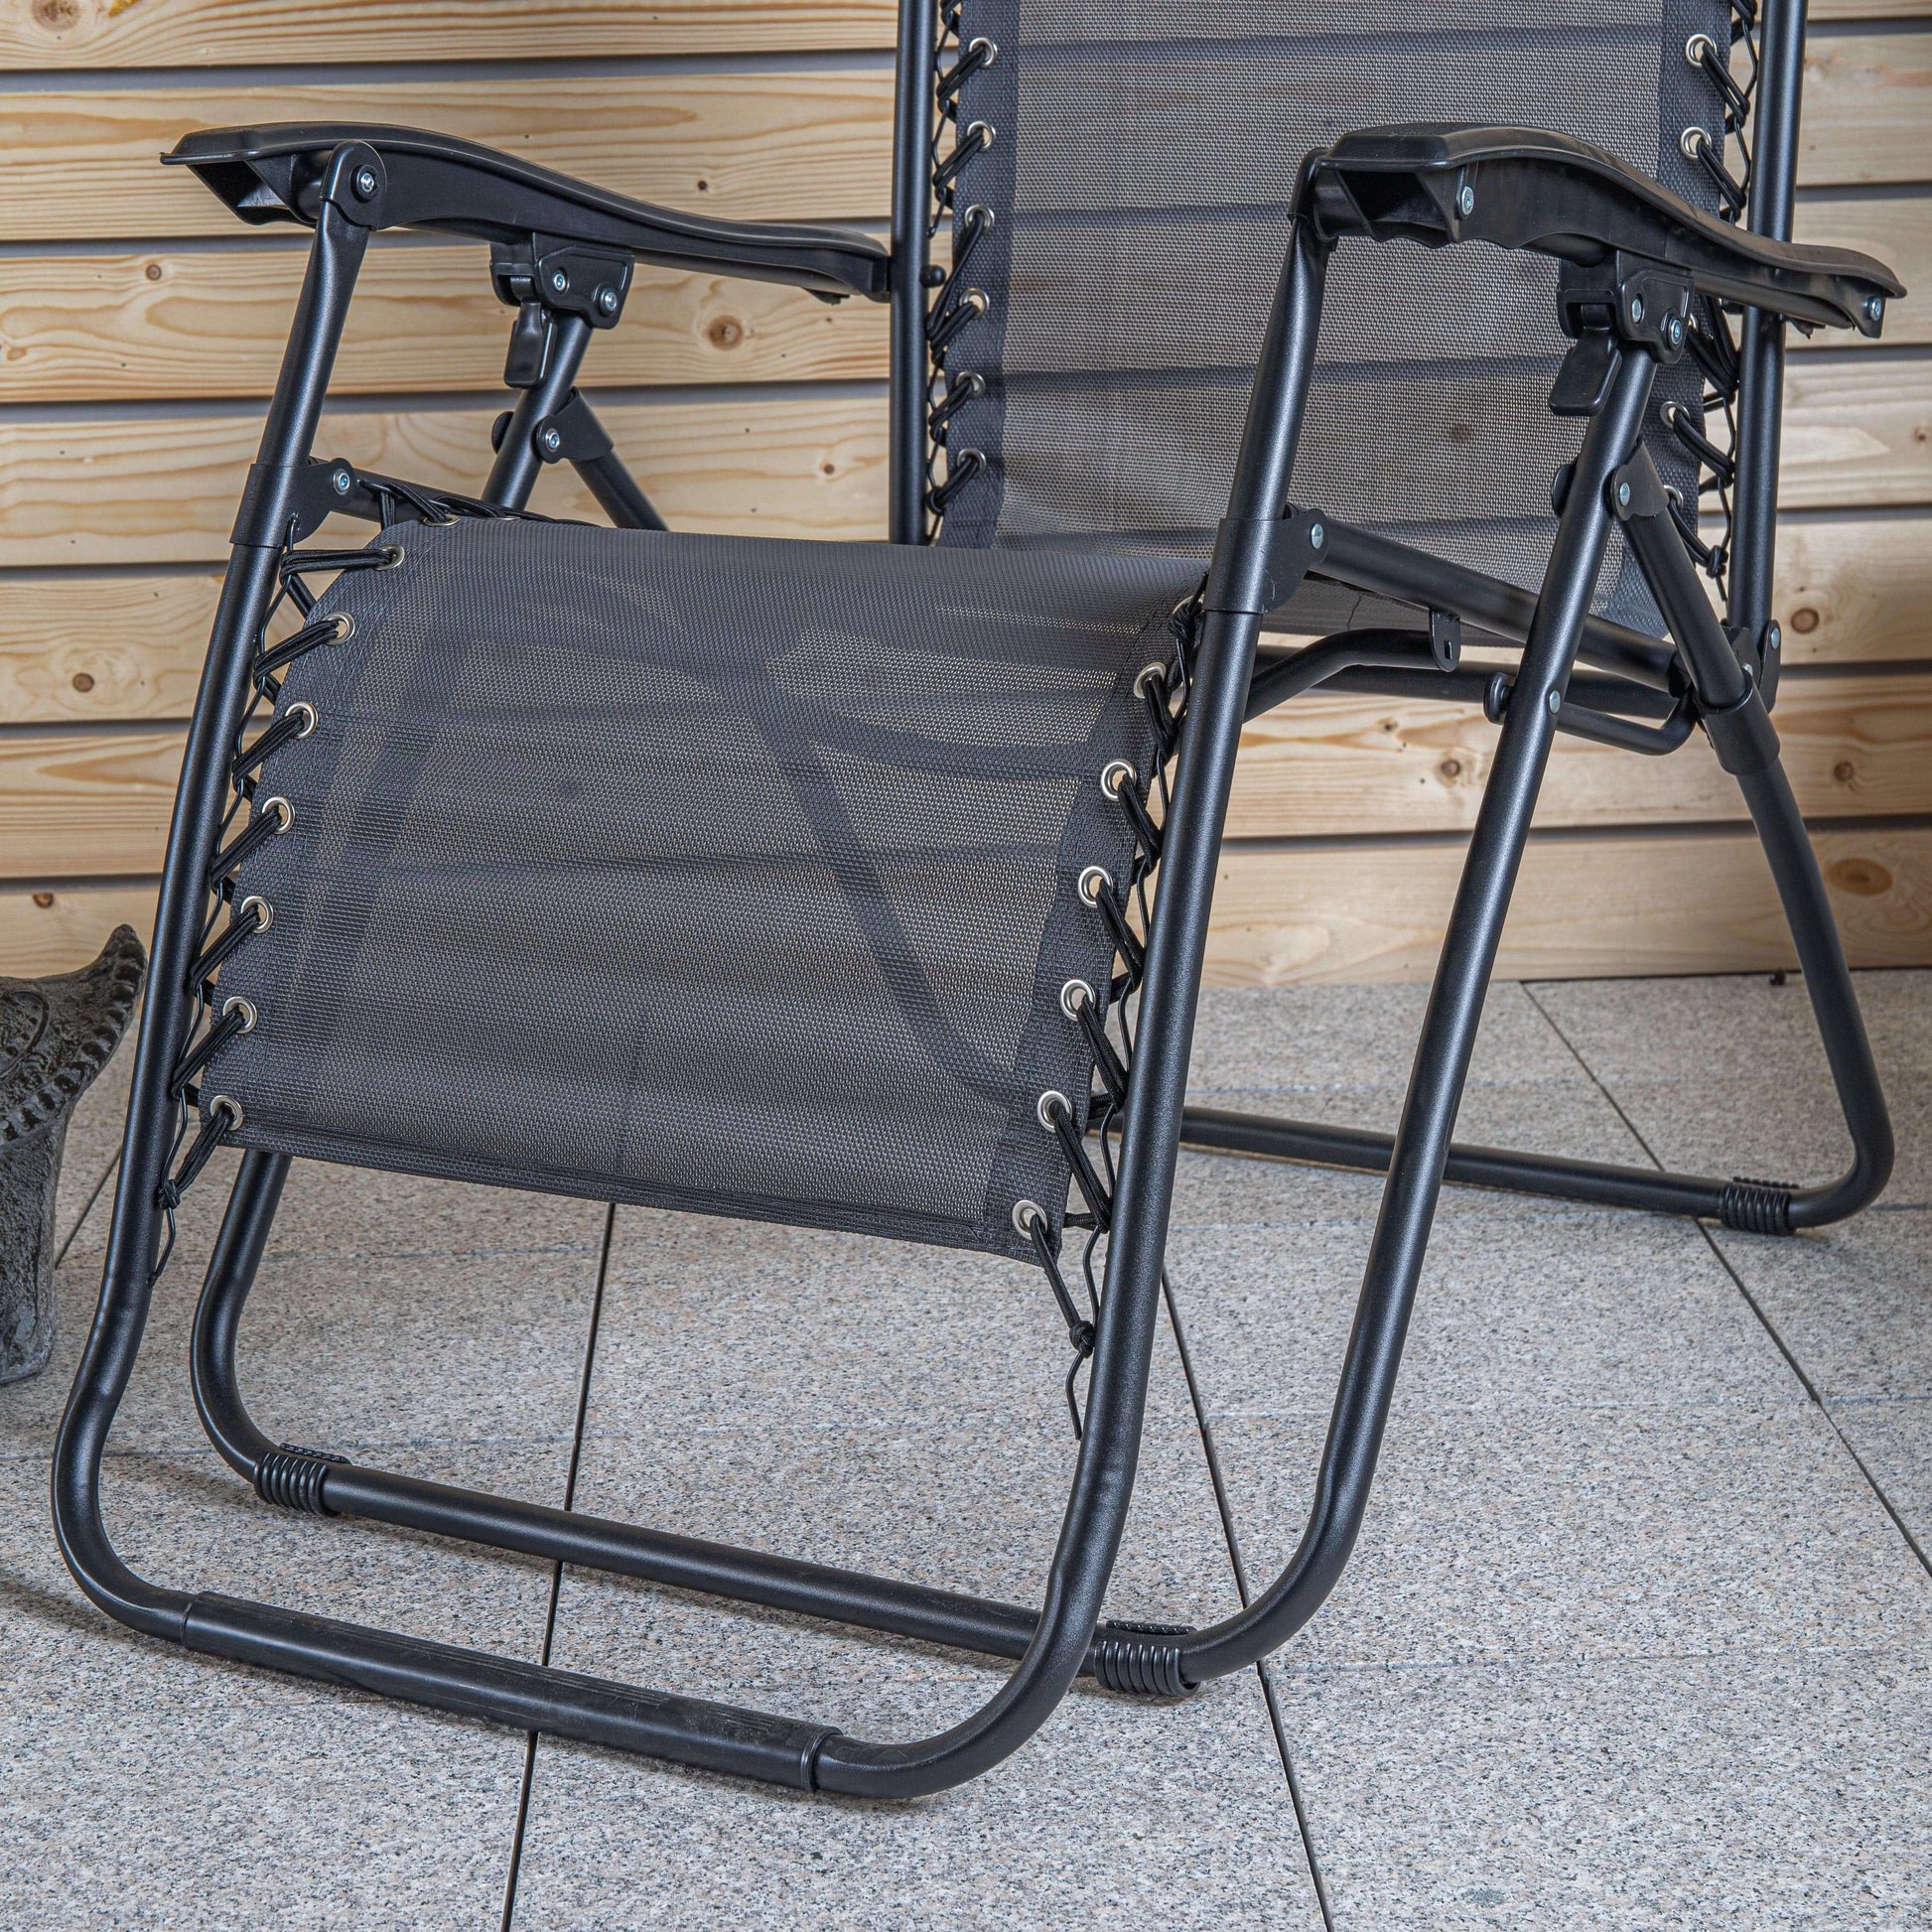 Gardening  -  Dark Grey Garden Relaxer Chair  -  50156069